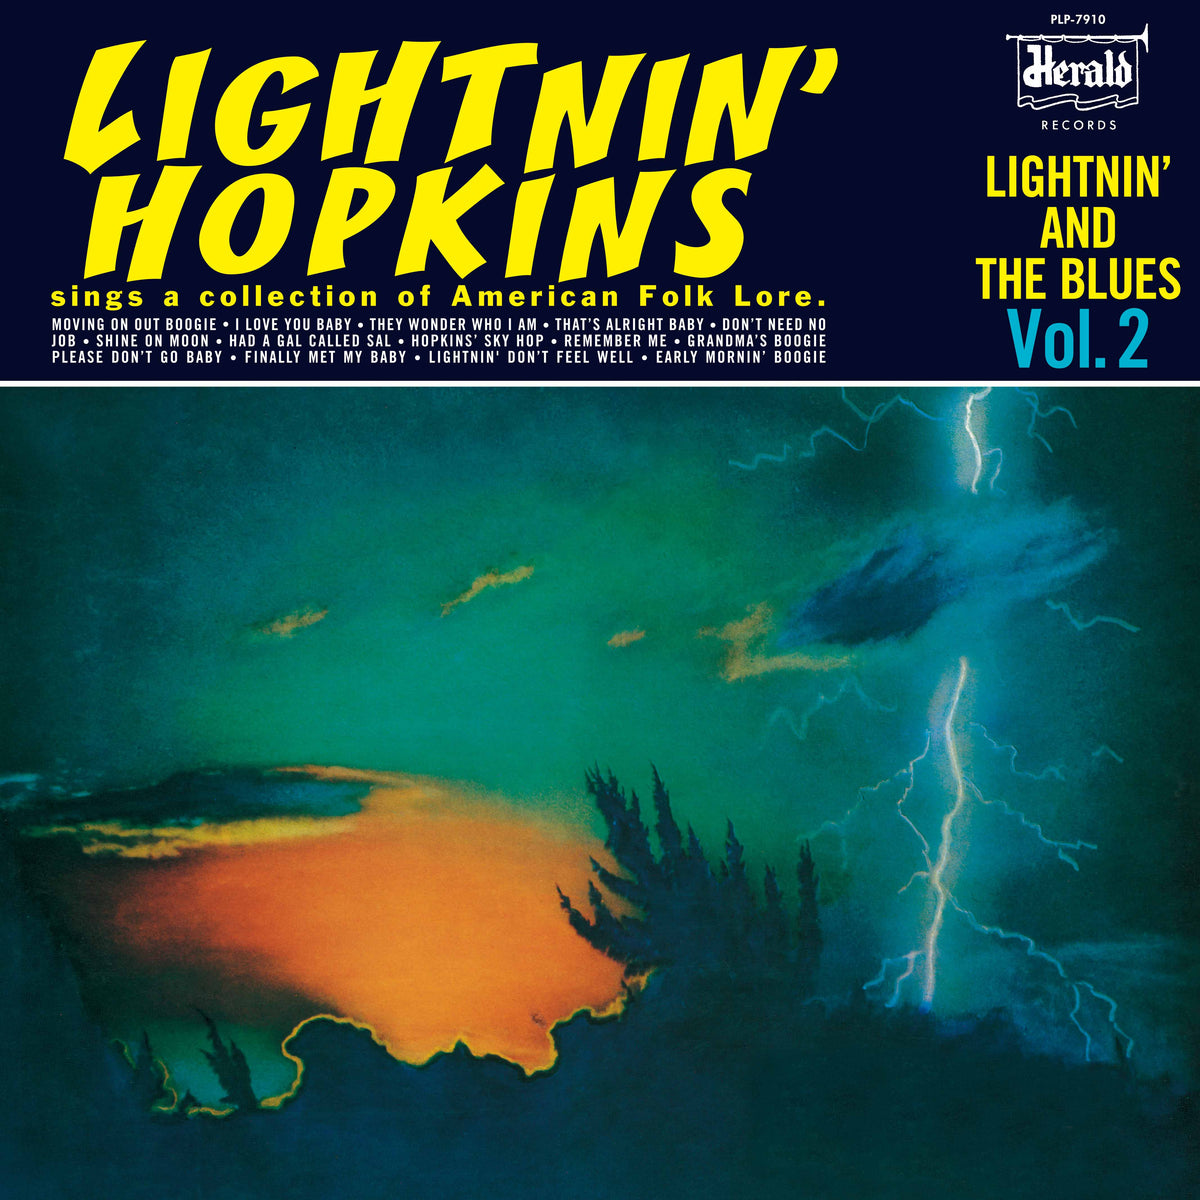 LIGHTNIN' HOPKINS『Lightnin' And The Blues Vol. 2』LP – P-VINE 